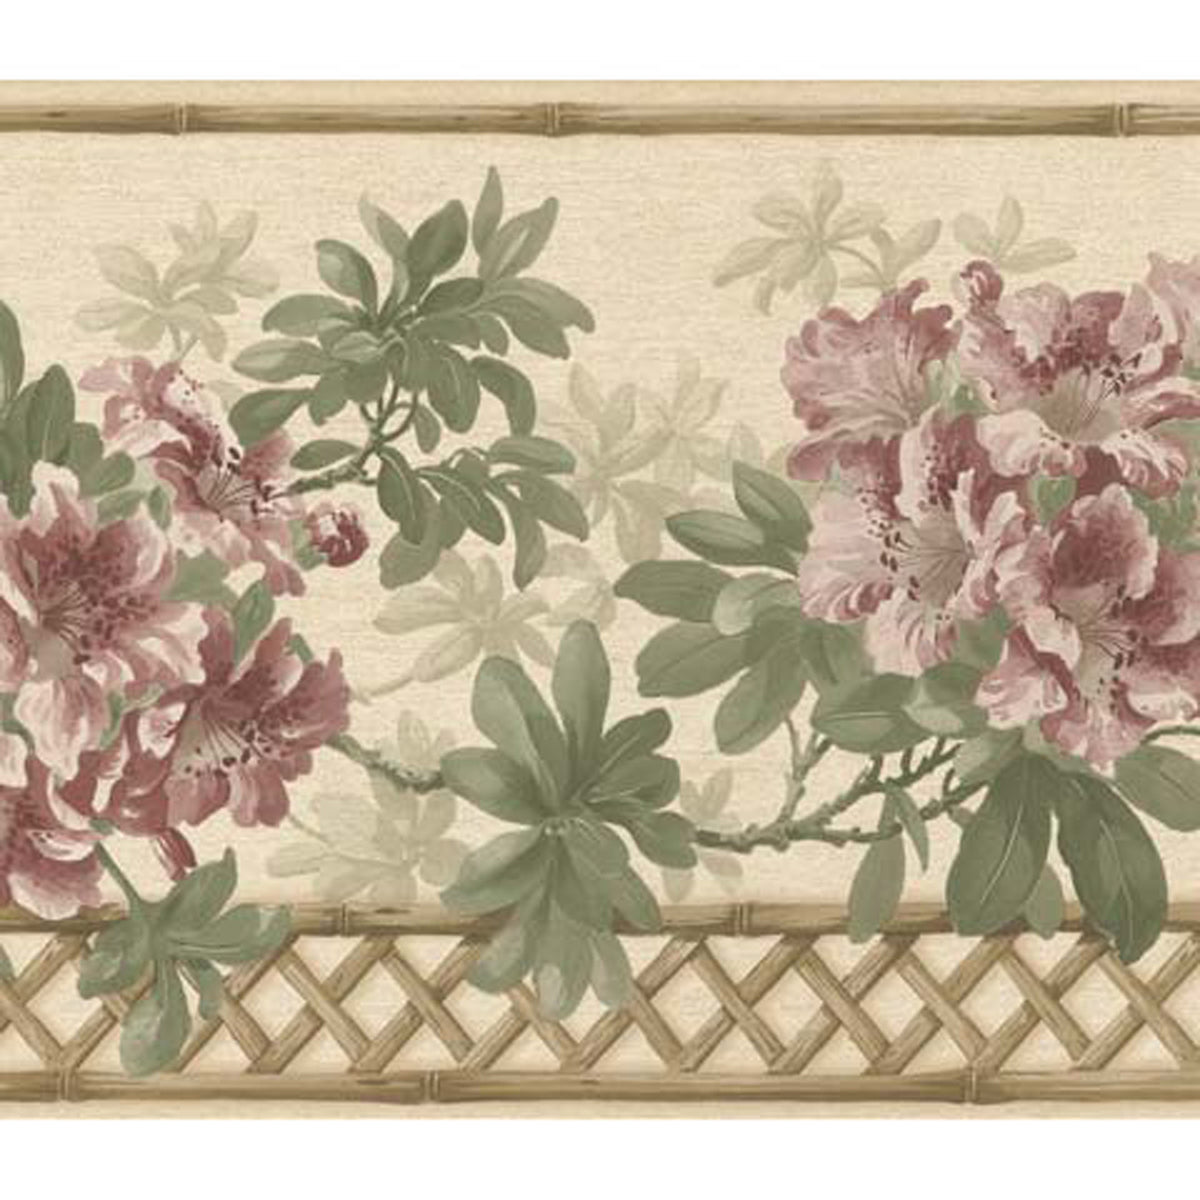 Floral  83B57401 Wallpaper Border